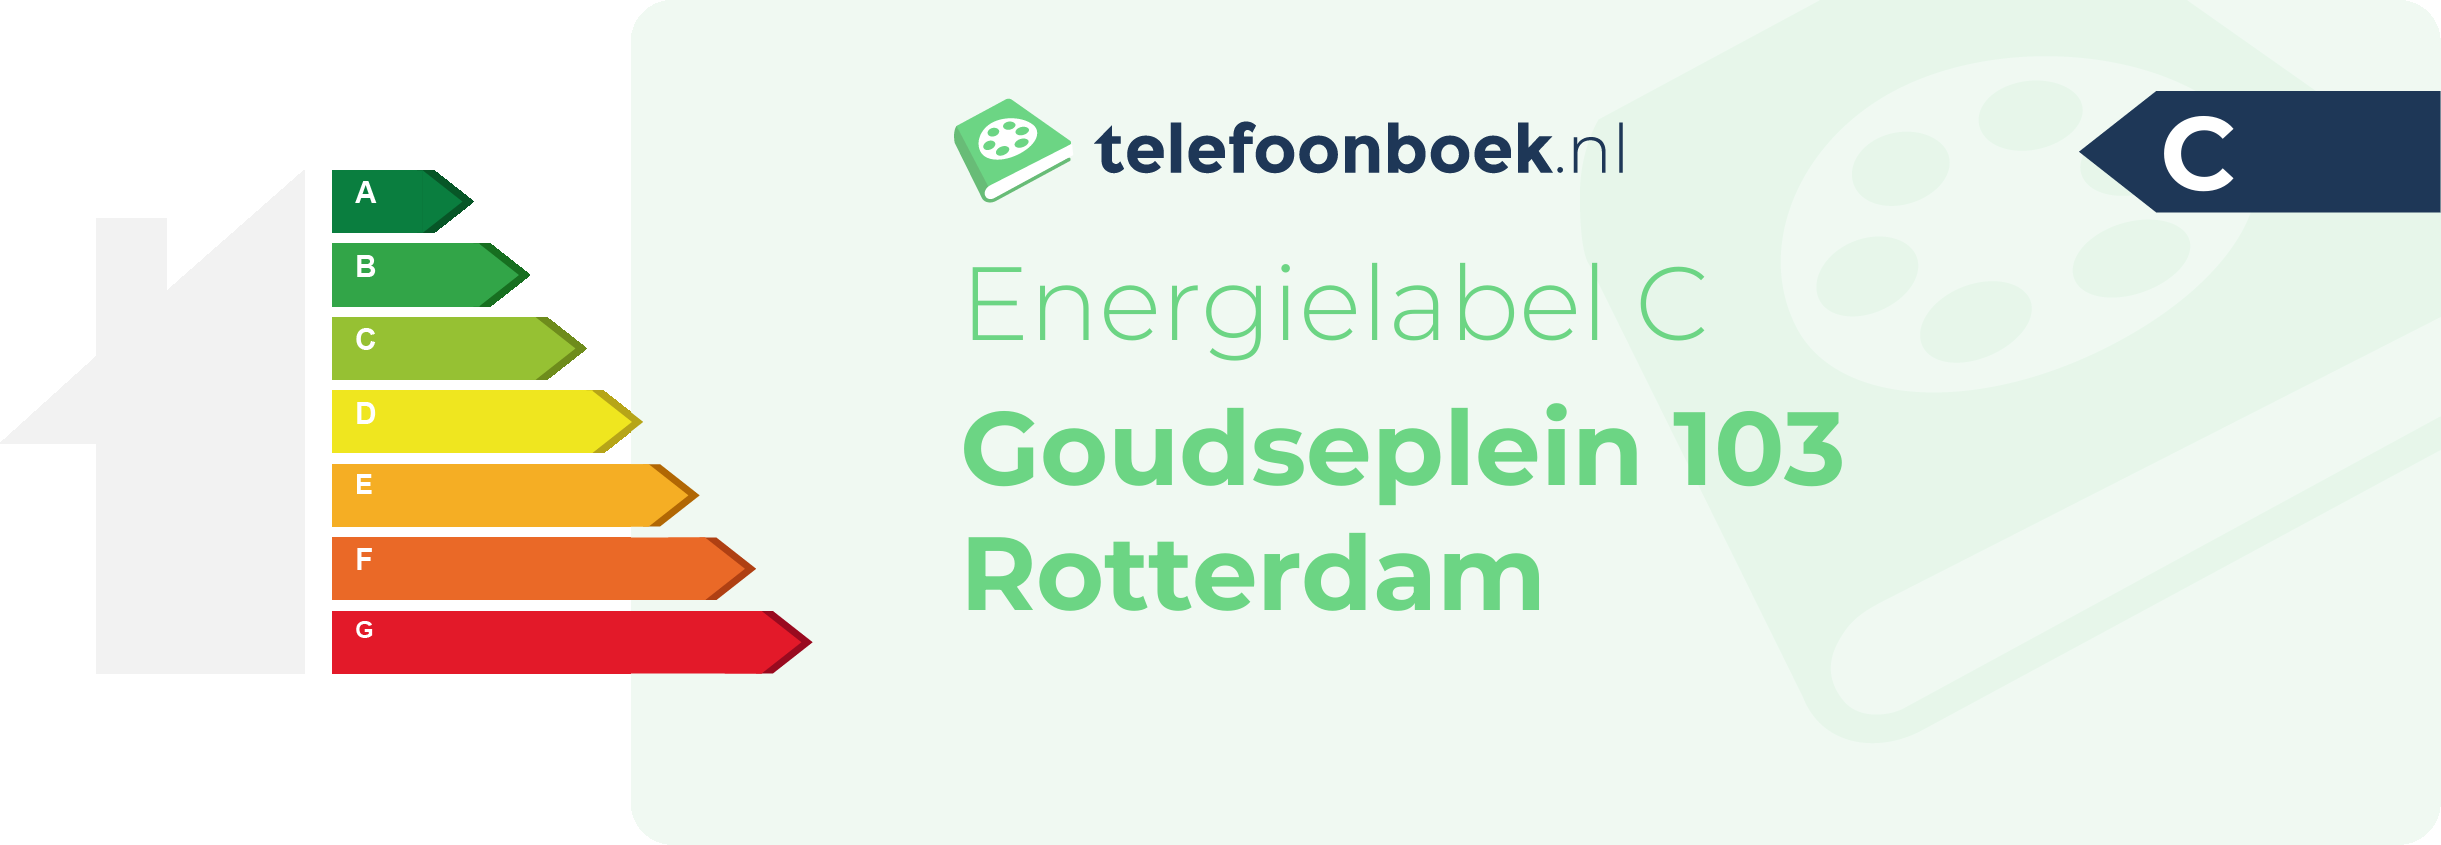 Energielabel Goudseplein 103 Rotterdam